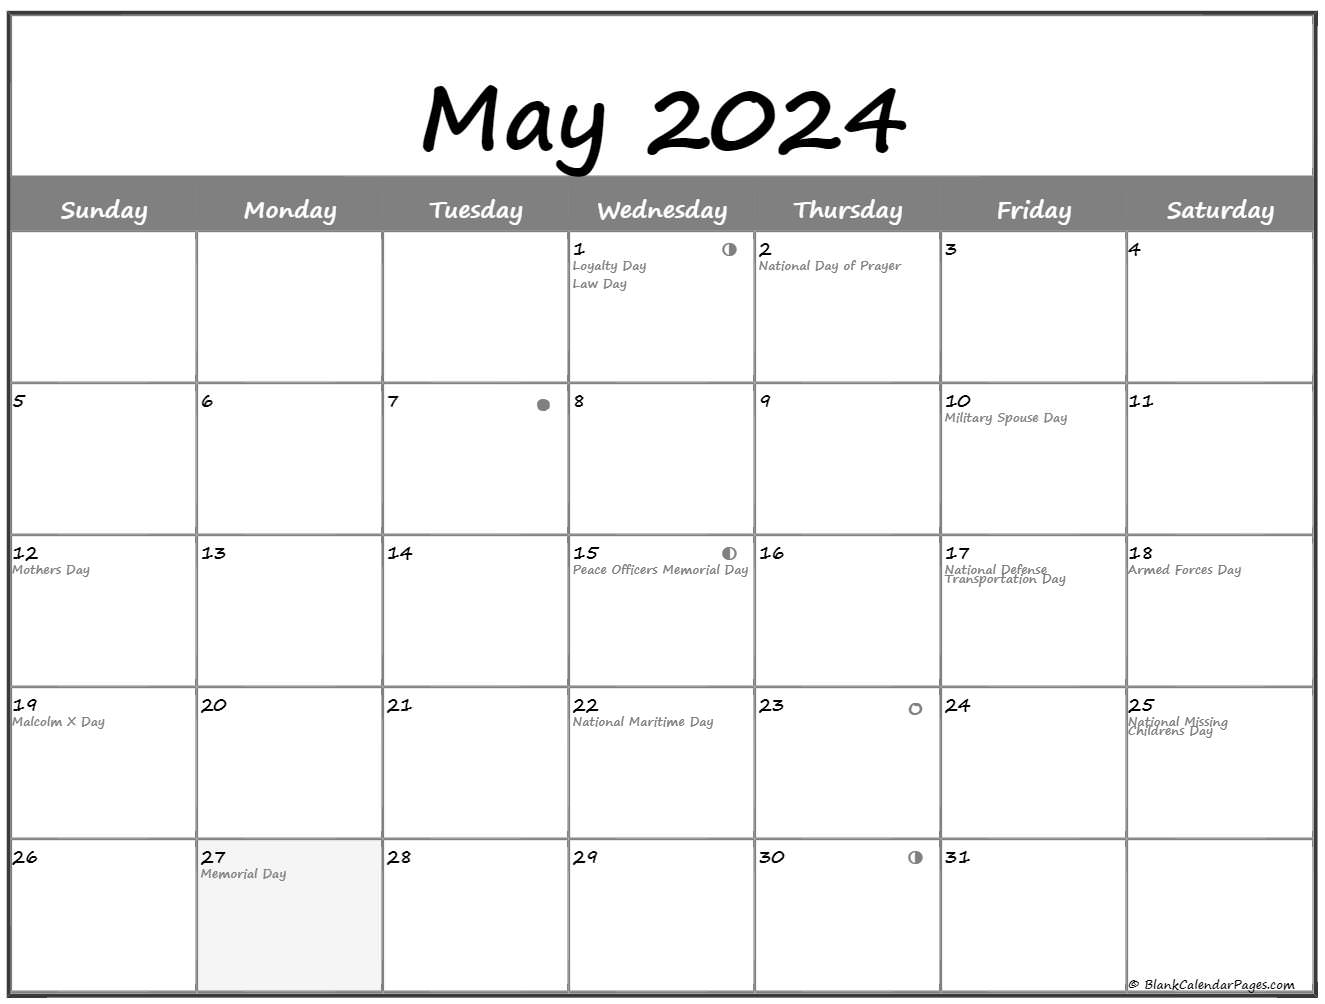 Moon Calendar April 2022 May 2022 Lunar Calendar | Moon Phase Calendar